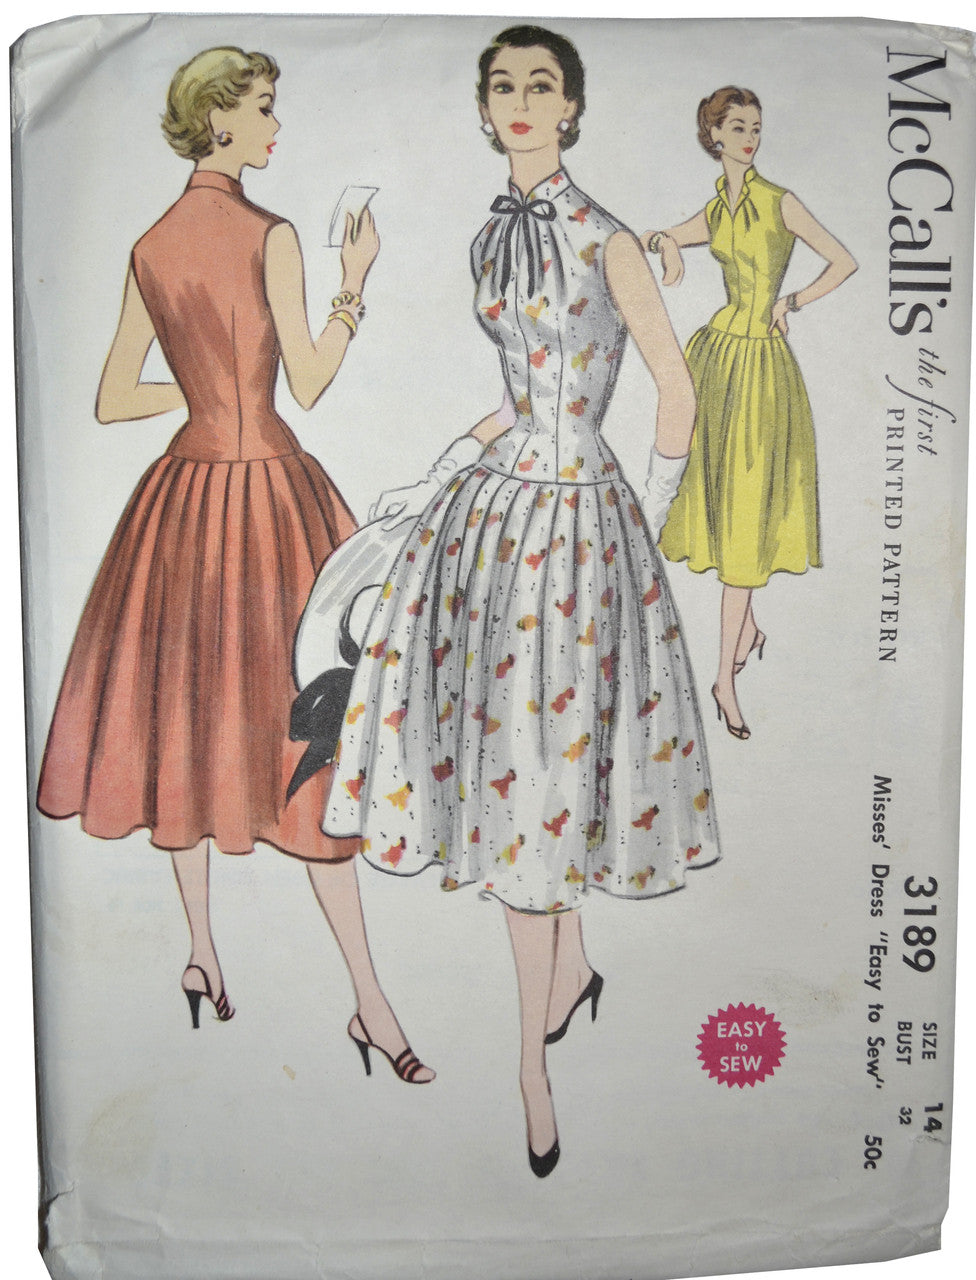 VINTAGE MCCALLS SIMPLICITY UNCUT Sewing Patterns Lot of 9 Womens 1950s  Fashion $39.98 - PicClick